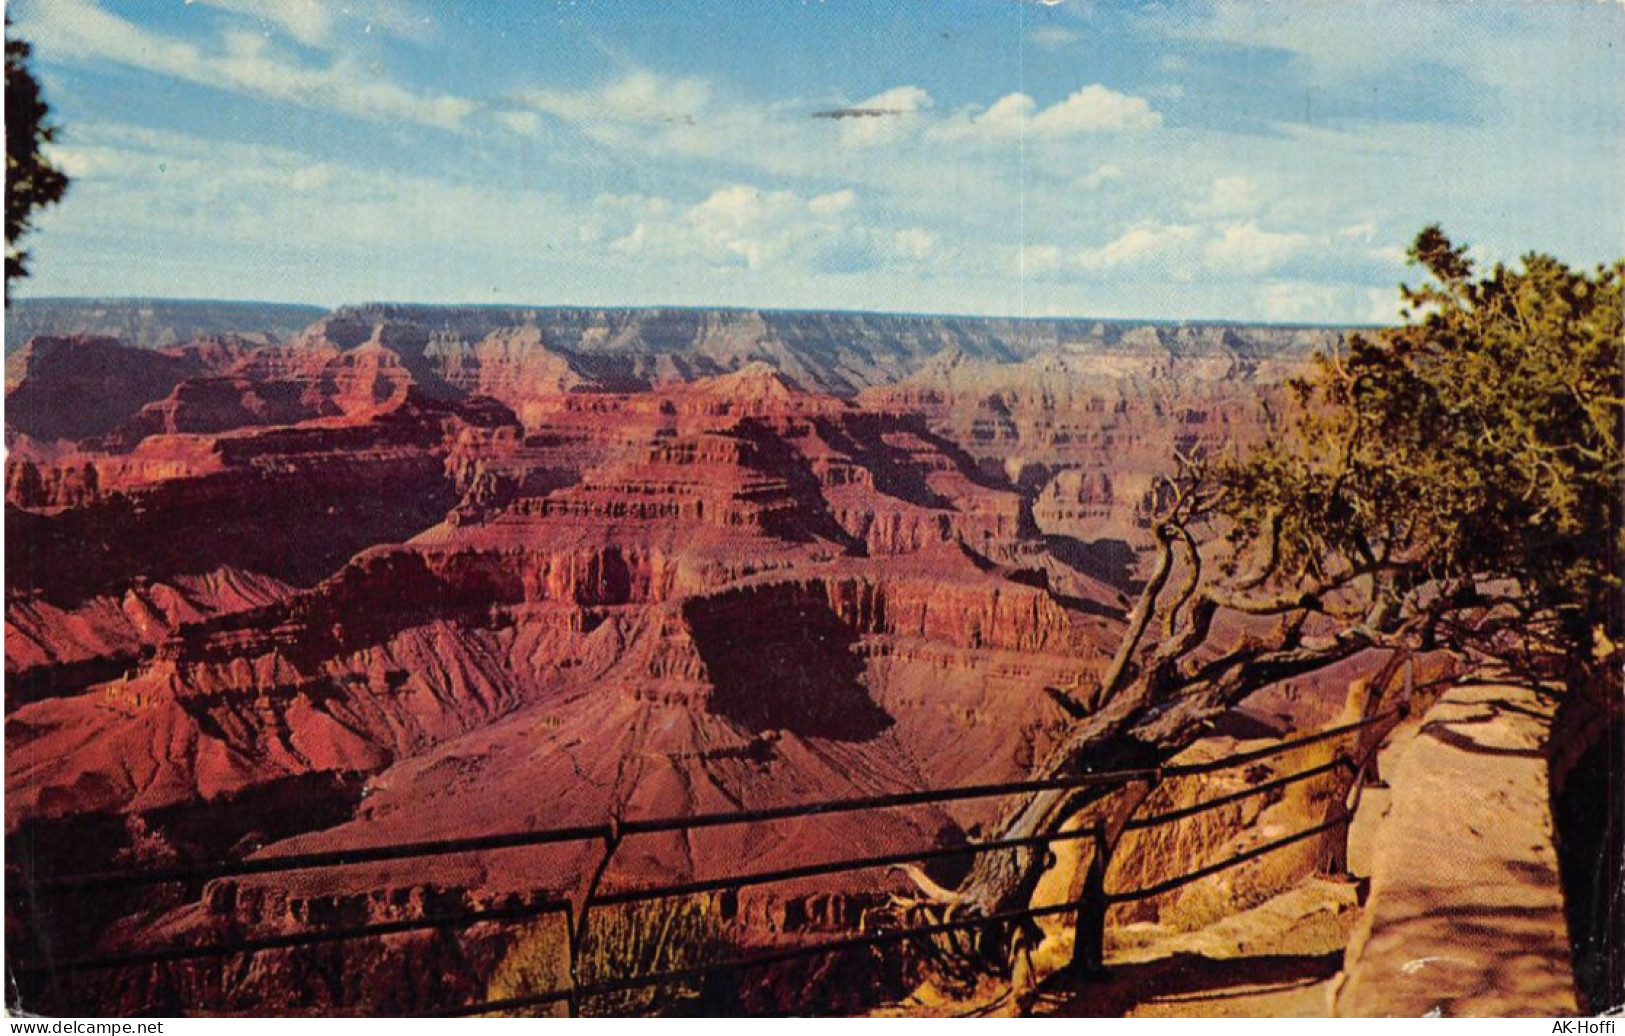 HOPI POINT GRAND CANYON NATIONAL PARK, ARIZONA - Grand Canyon